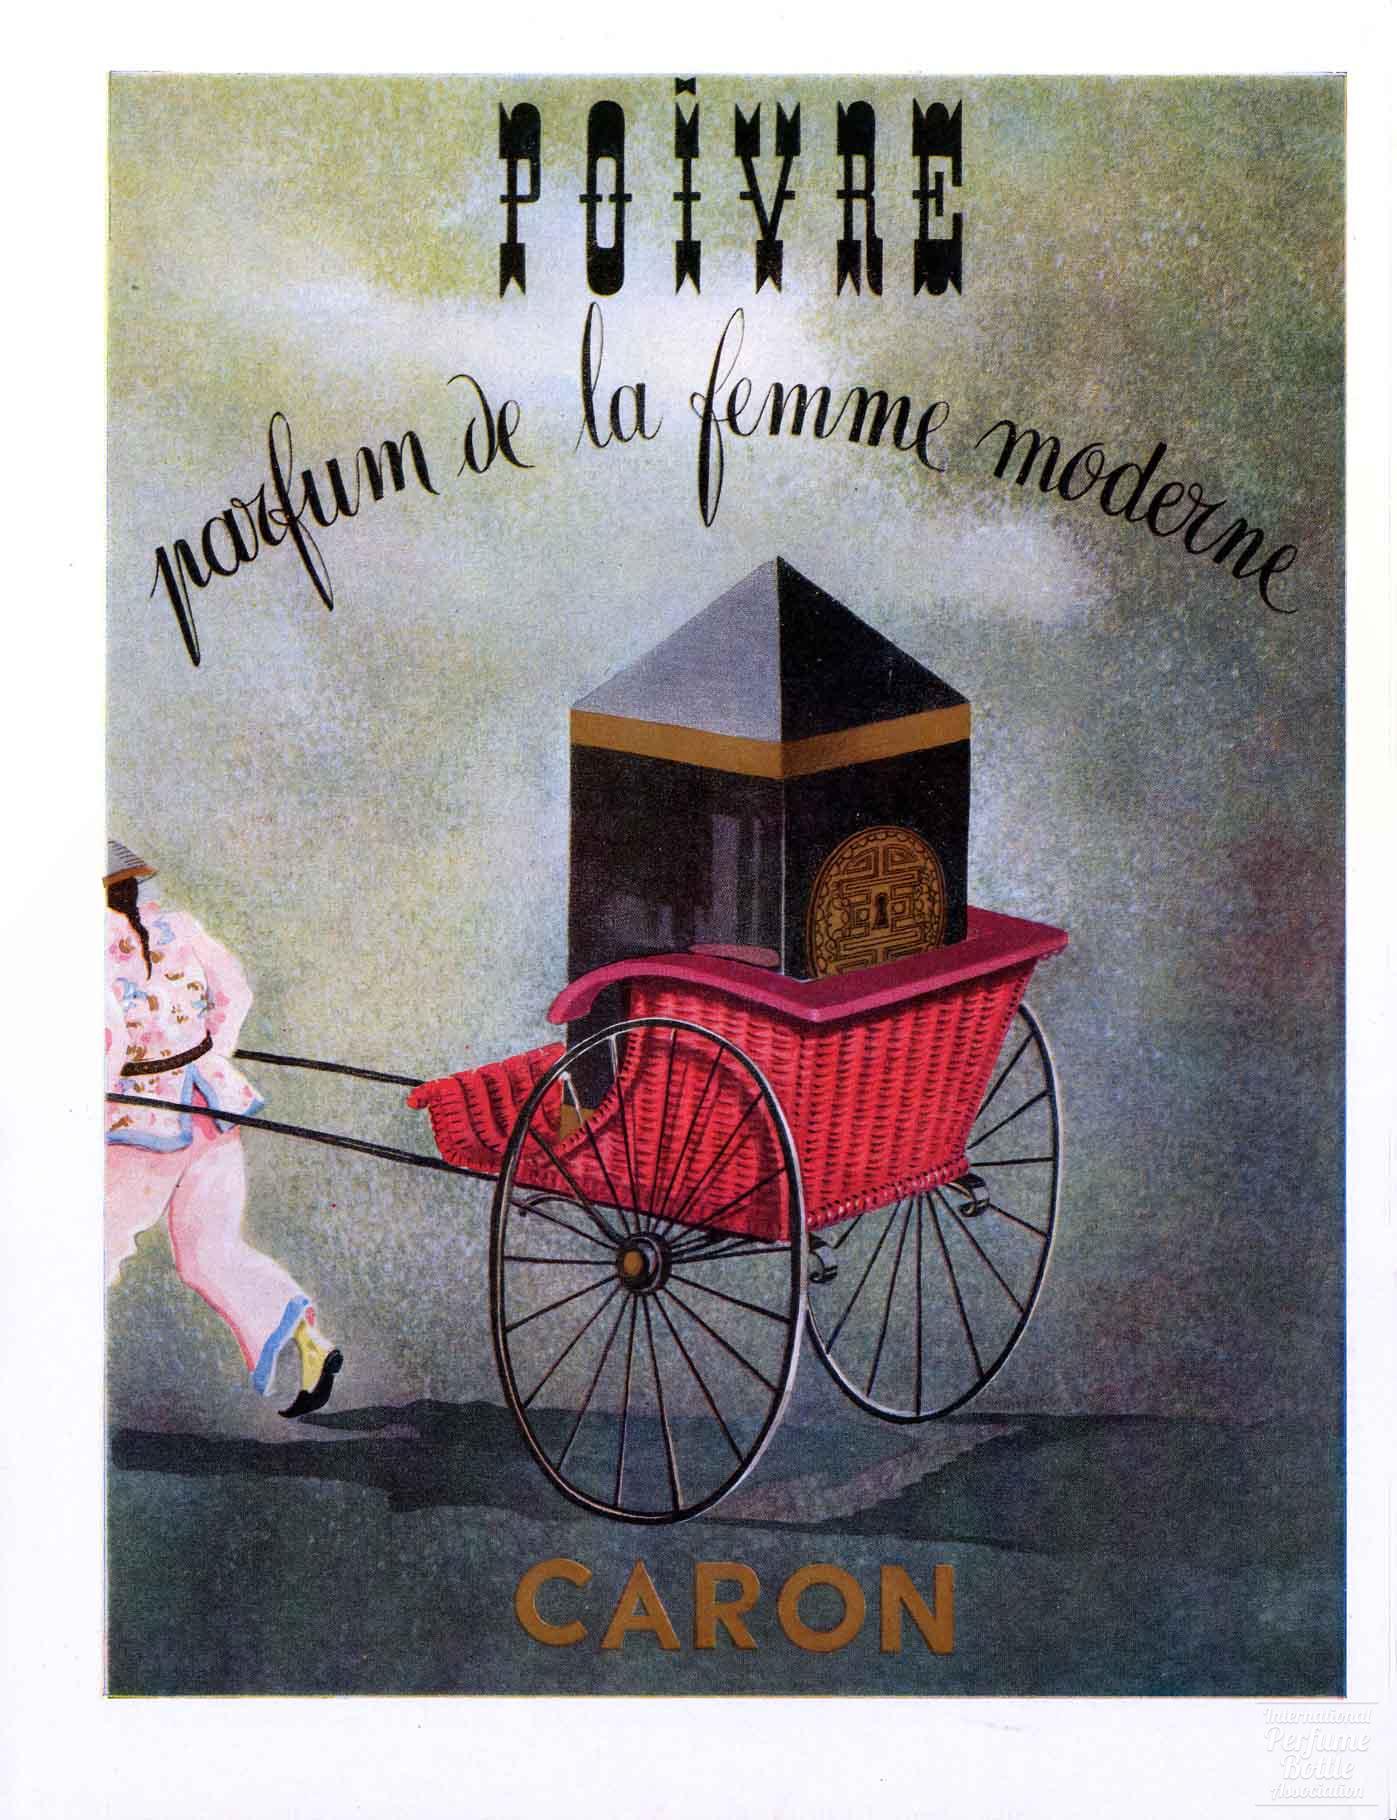 "Poivre" by Caron Advertisement - 1954